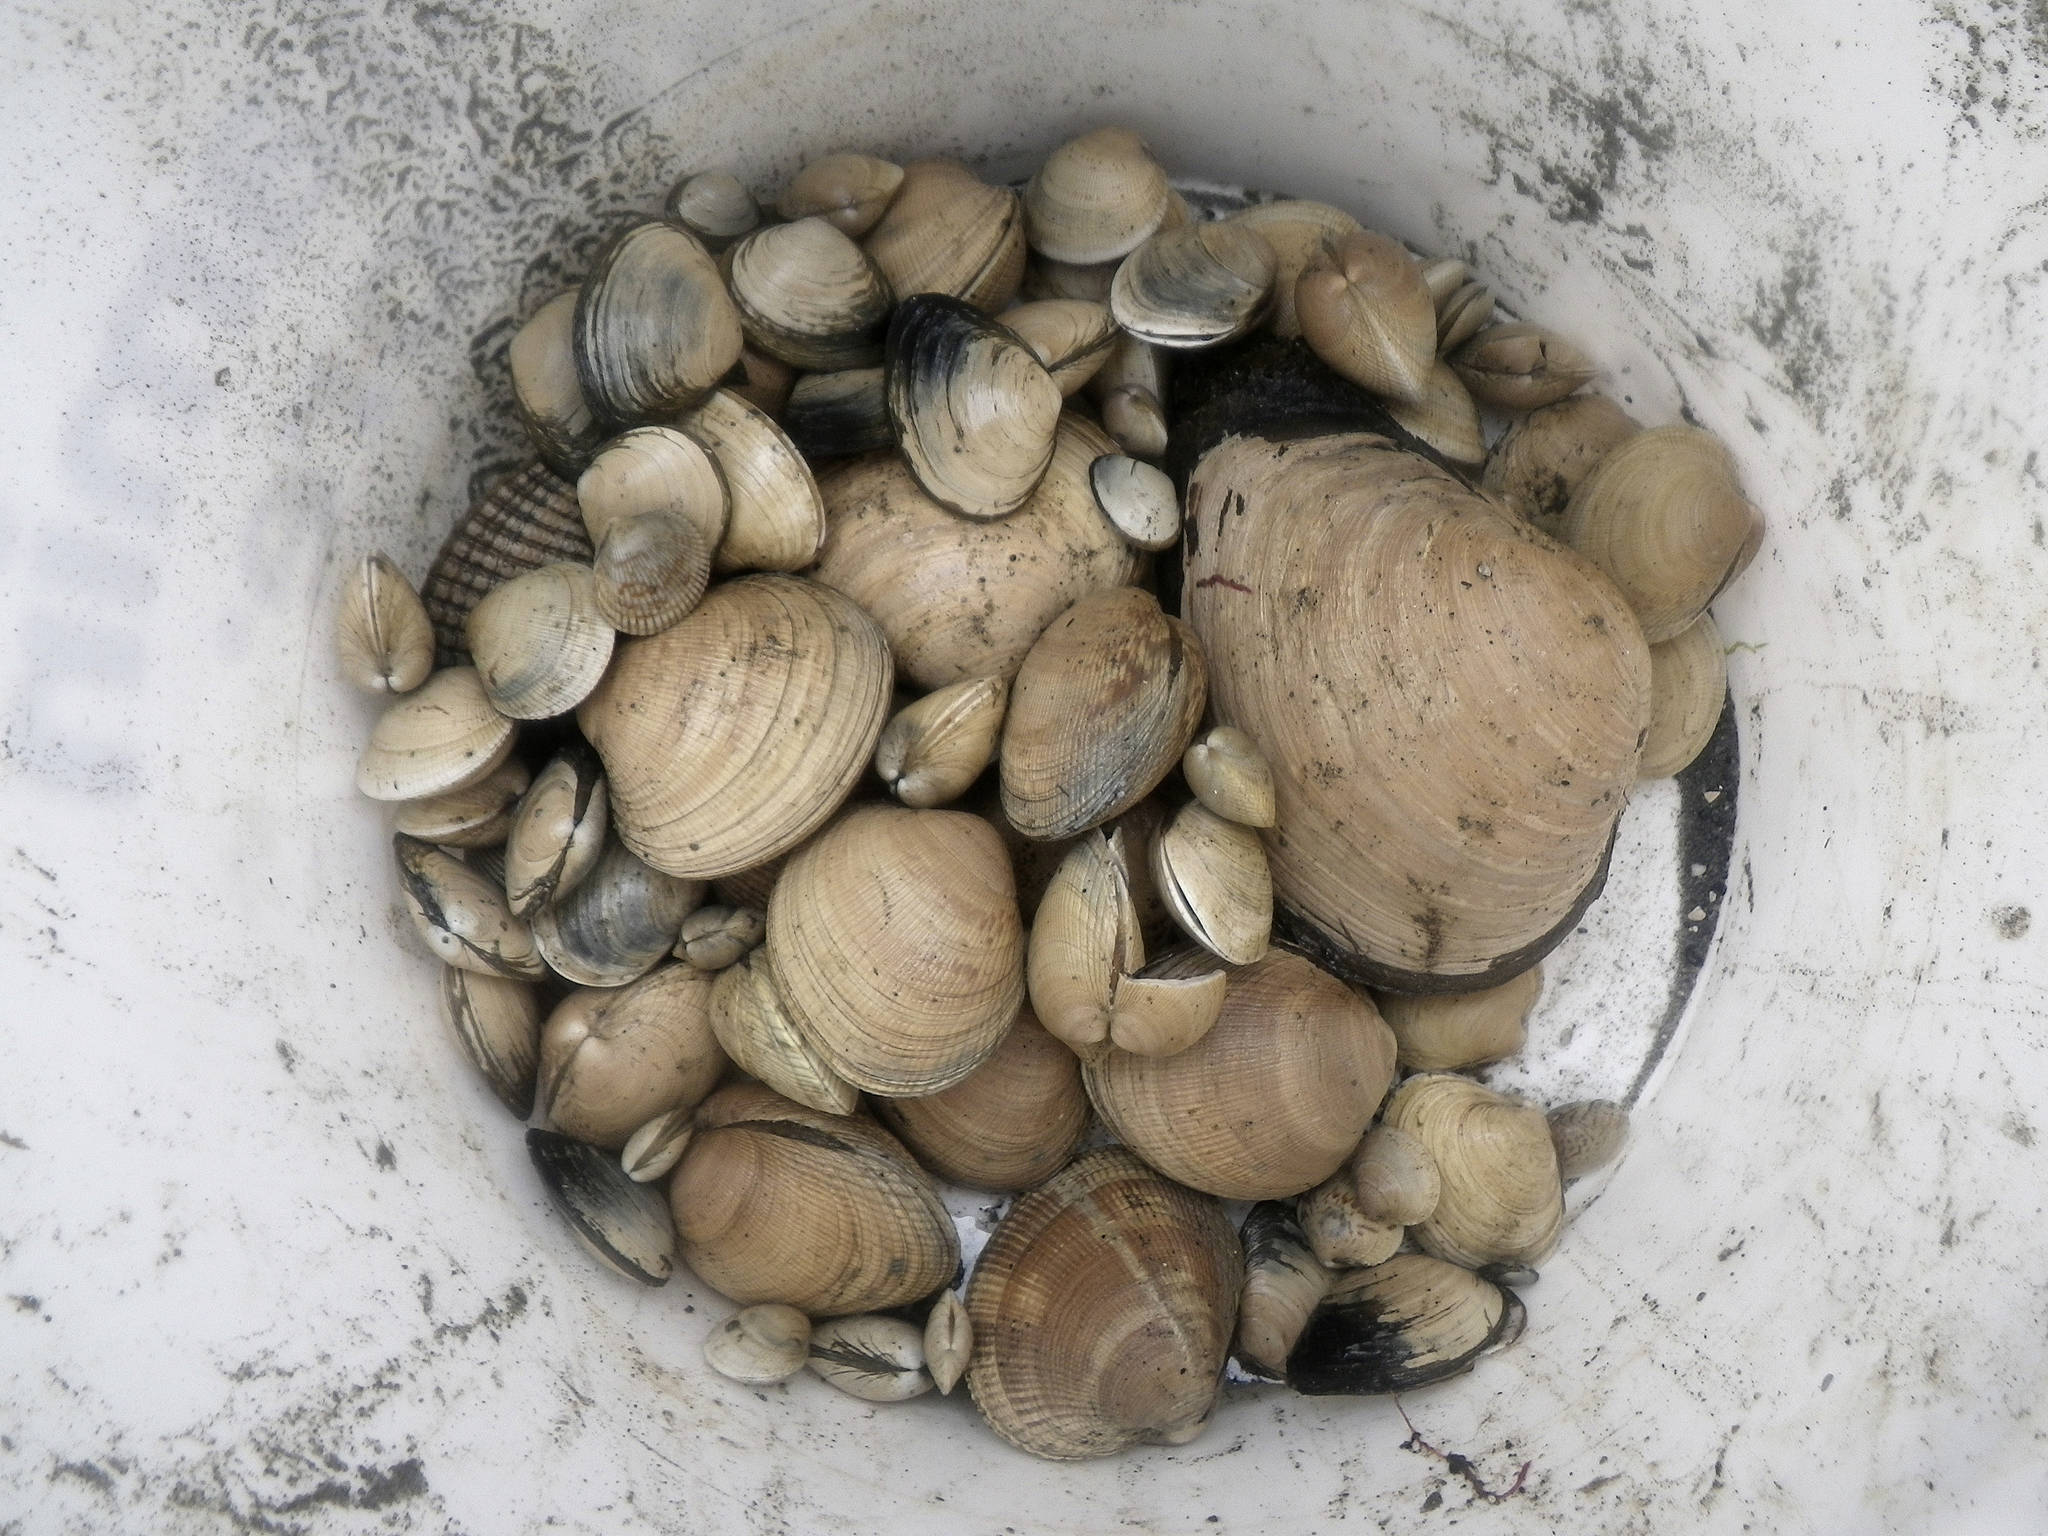 Soapy clams raise concerns for island ecosytems